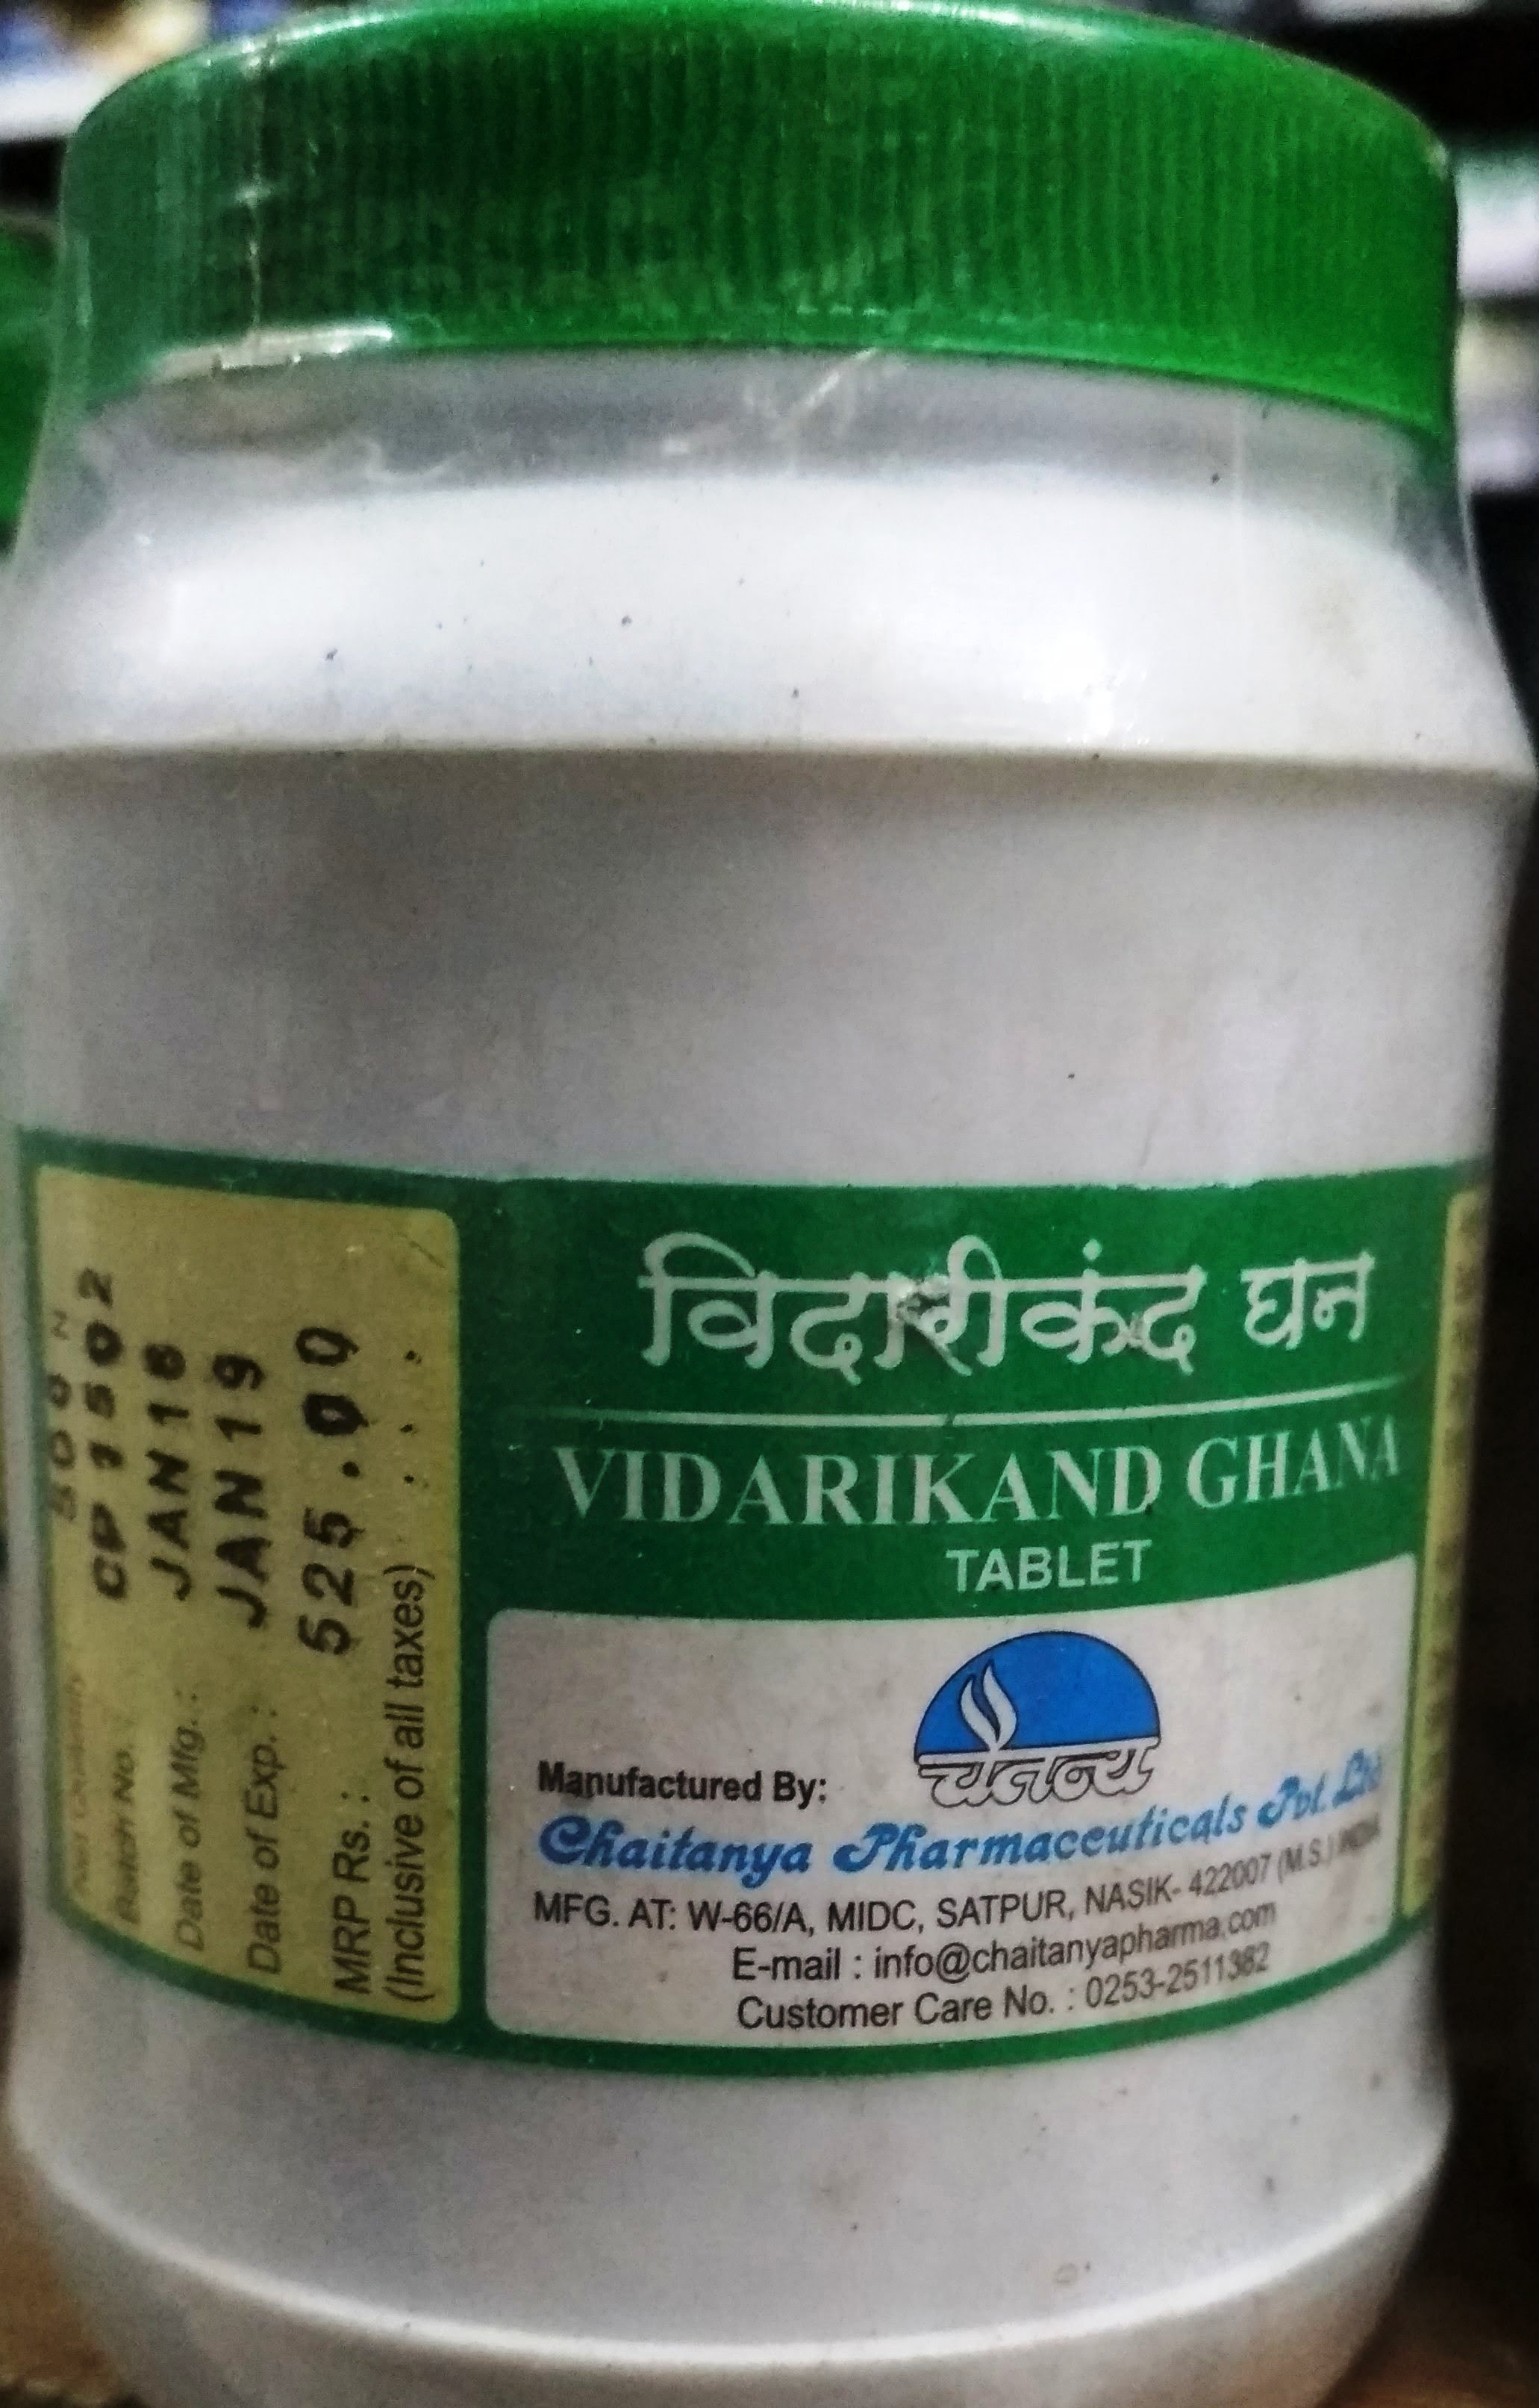 vidarikand ghana 2000tab upto 20% off free shipping chaitanya pharmaceuticals